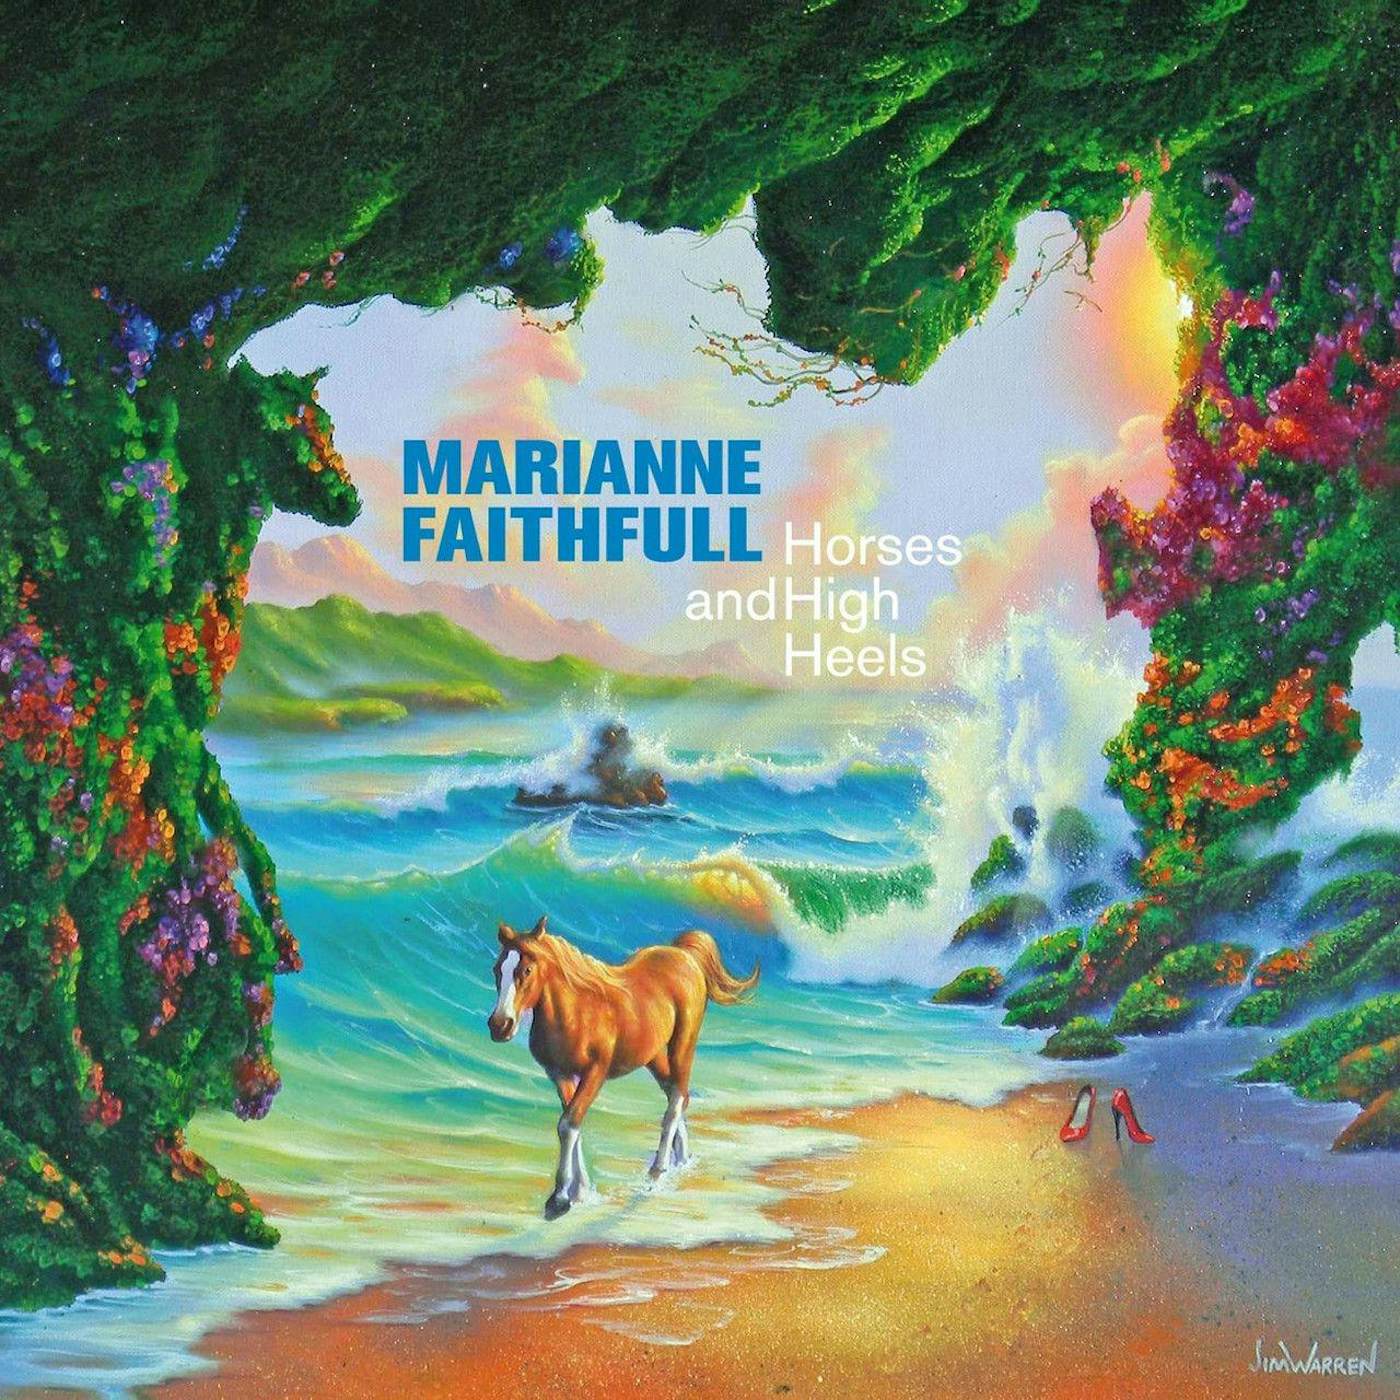 Marianne Faithfull Horses & High Heels (Yellow Vinyl Record/2lp/180g)